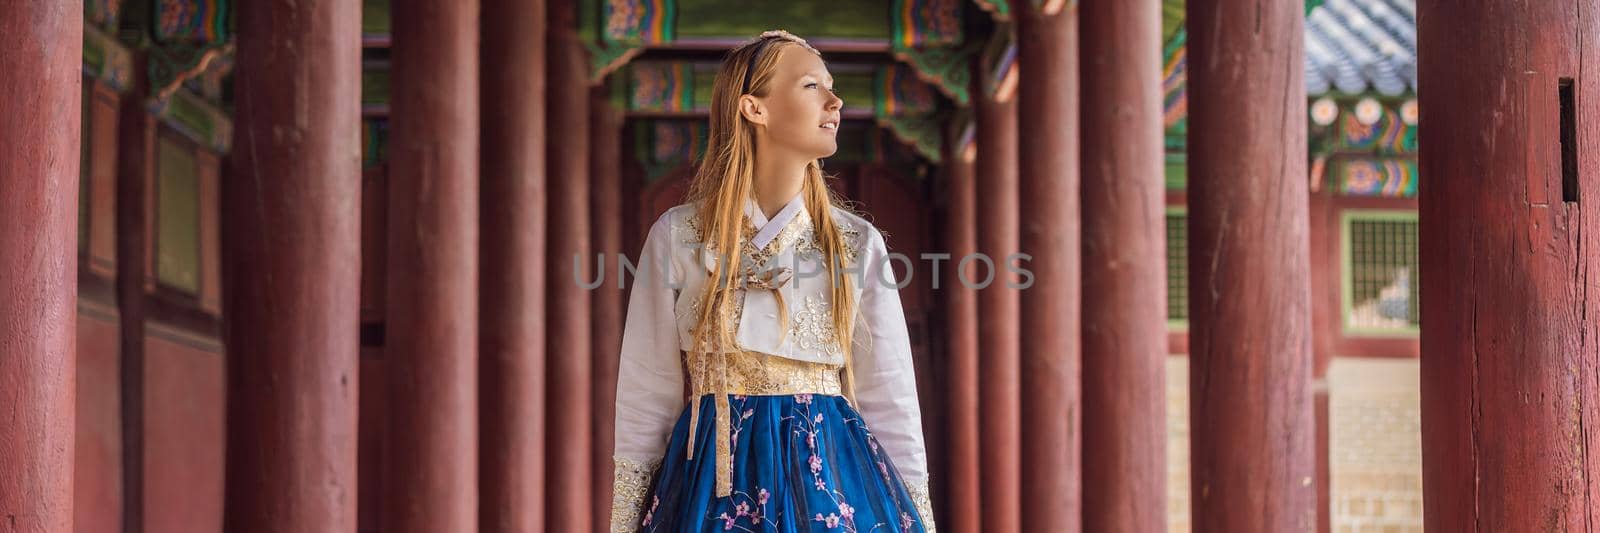 Young caucasian female tourist in hanbok national korean dress Travel to Korea concept. National Korean clothing. Entertainment for tourists - trying on national Korean clothing BANNER, LONG FORMAT by galitskaya